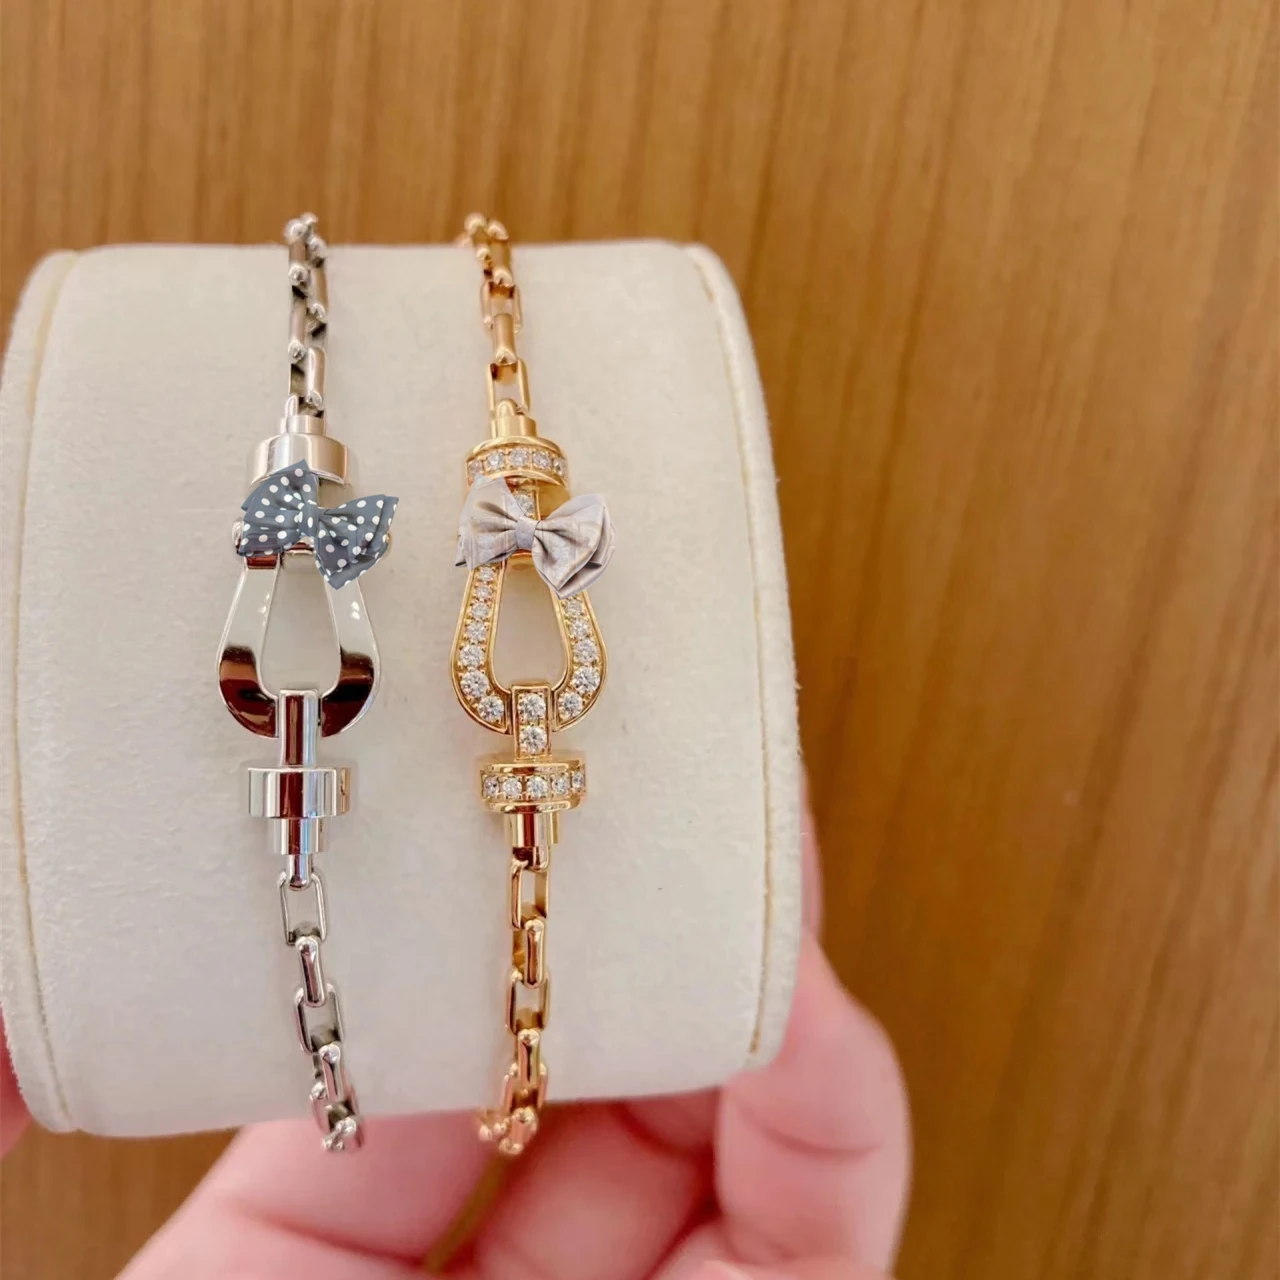 U Shaped Horseshoe Buckle Metal Chain Bracelet 1:1 LOGO Fashion Luxury Jewelry Couple Gift Custom Factory Wholesale